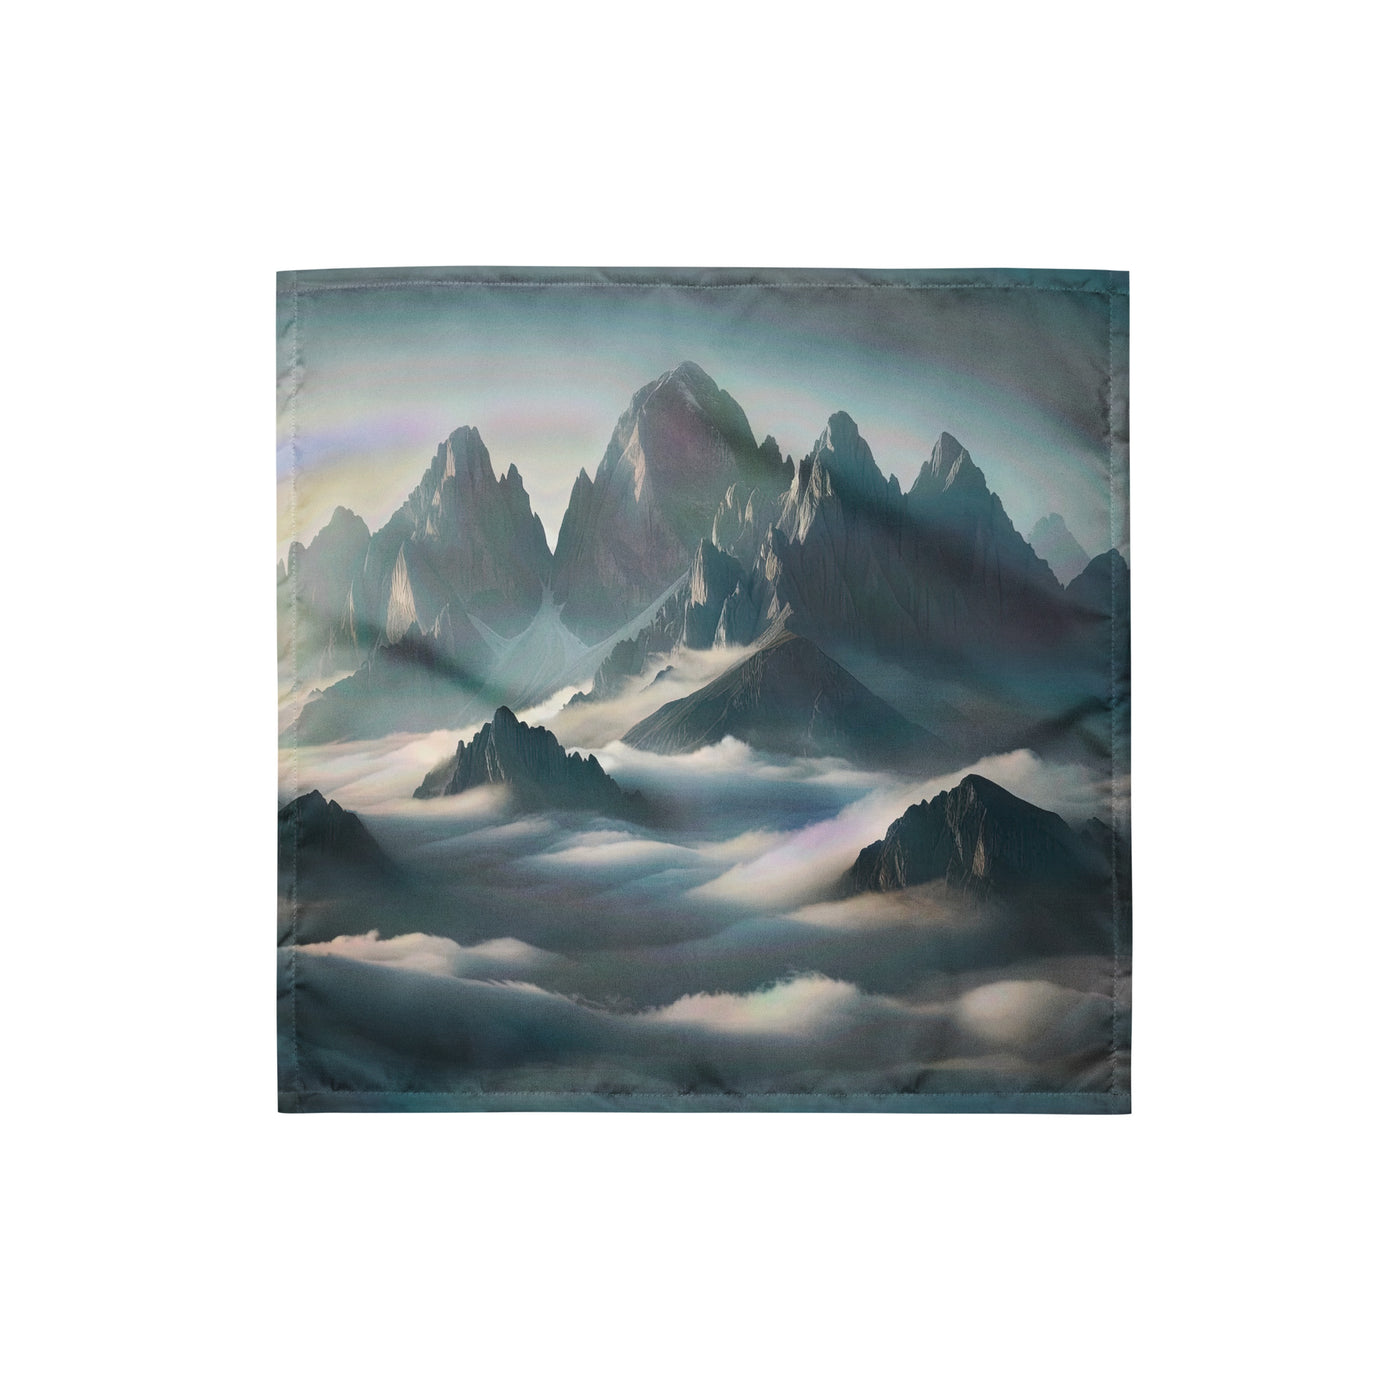 Foto eines nebligen Alpenmorgens, scharfe Gipfel ragen aus dem Nebel - Bandana (All-Over Print) berge xxx yyy zzz S